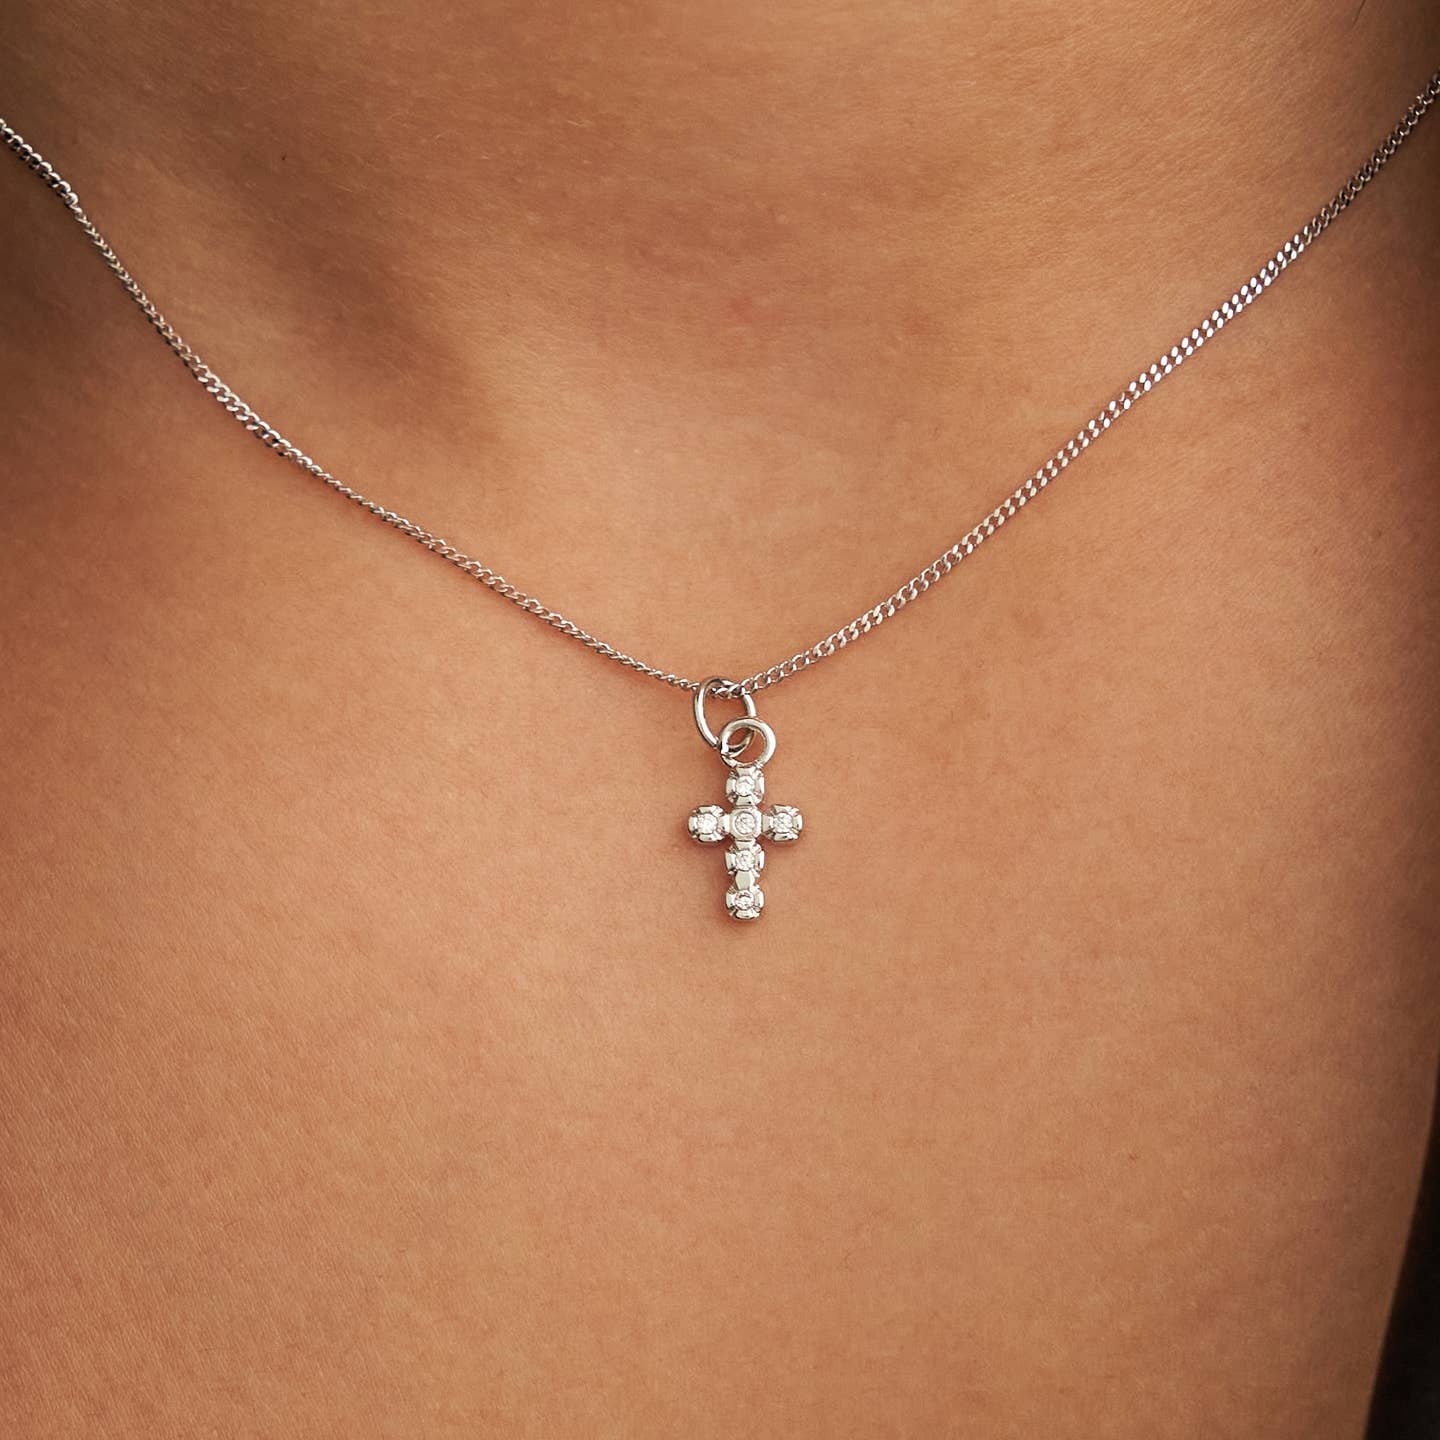 Silver Shiny Cross Necklace 581